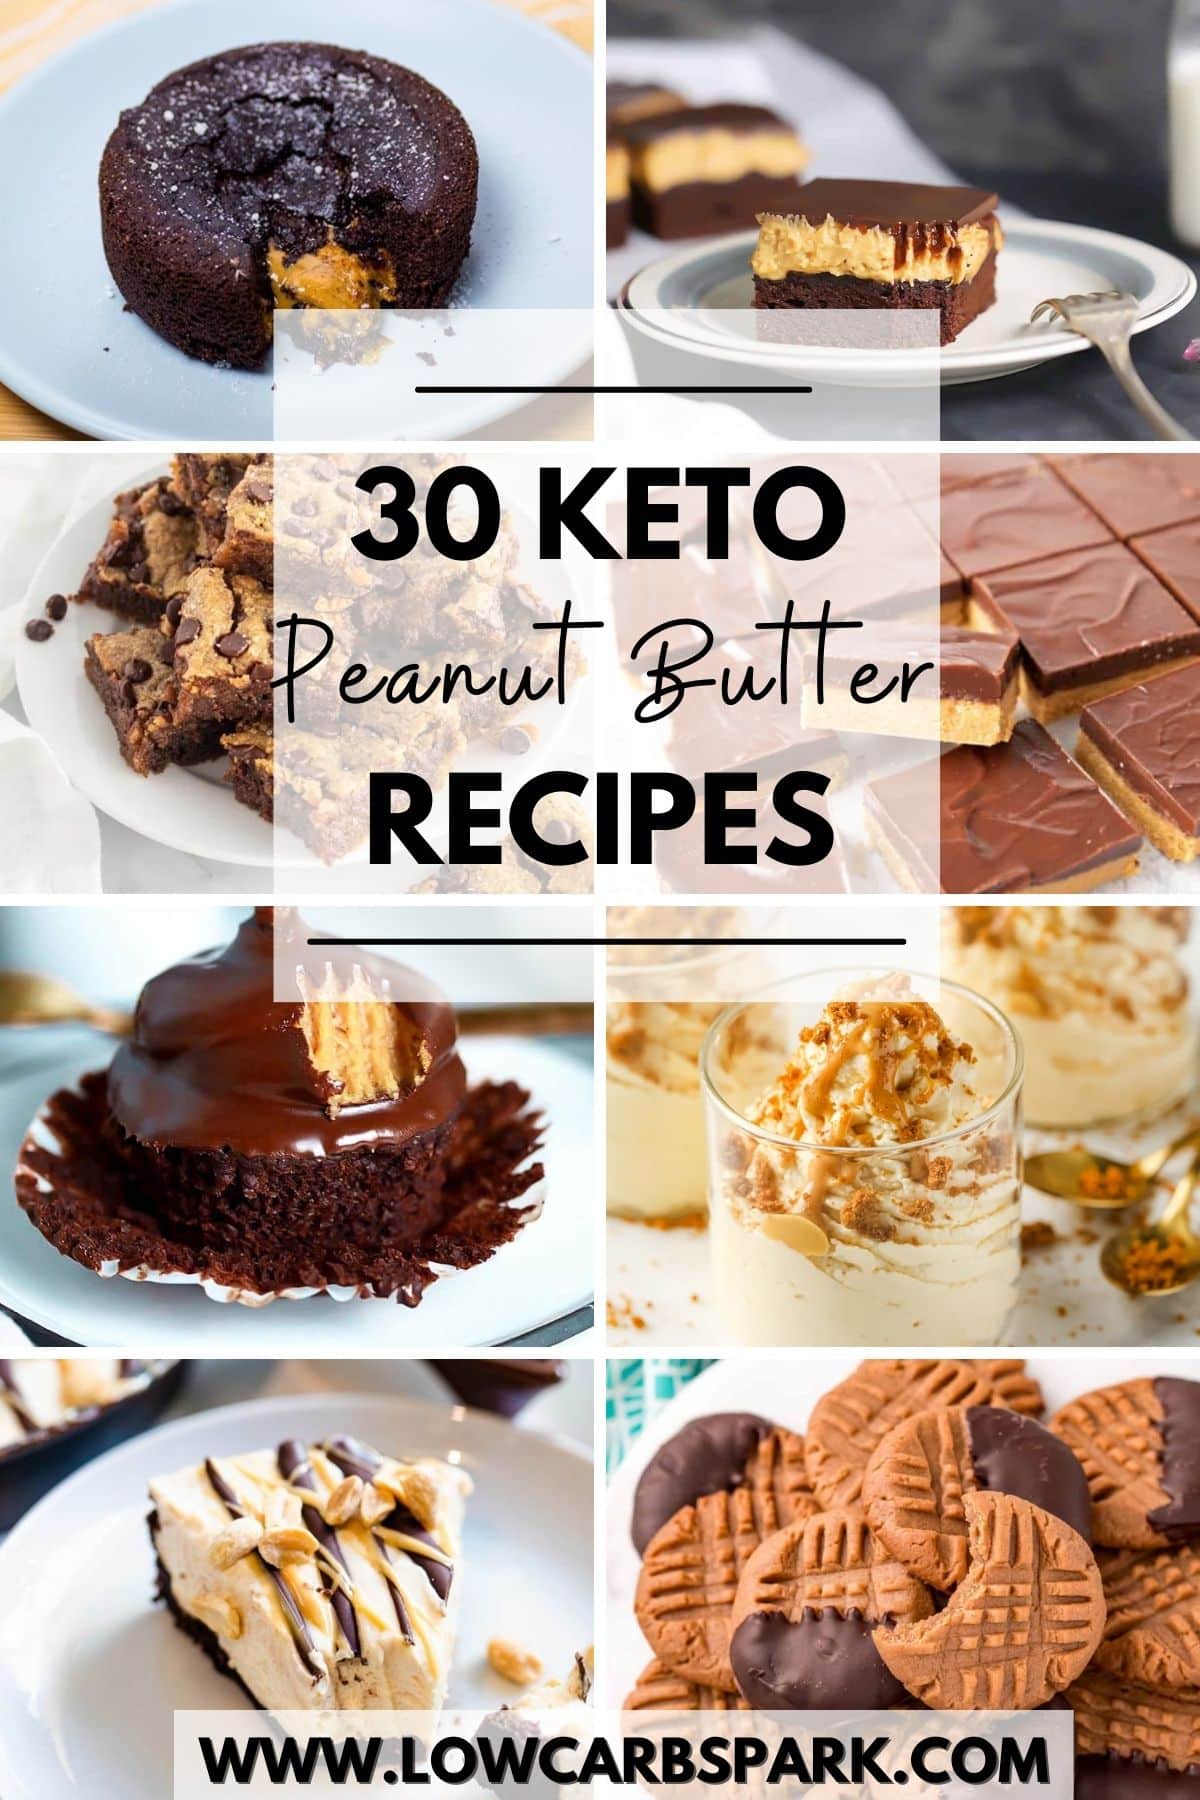 30 keto
peanut butter recipes